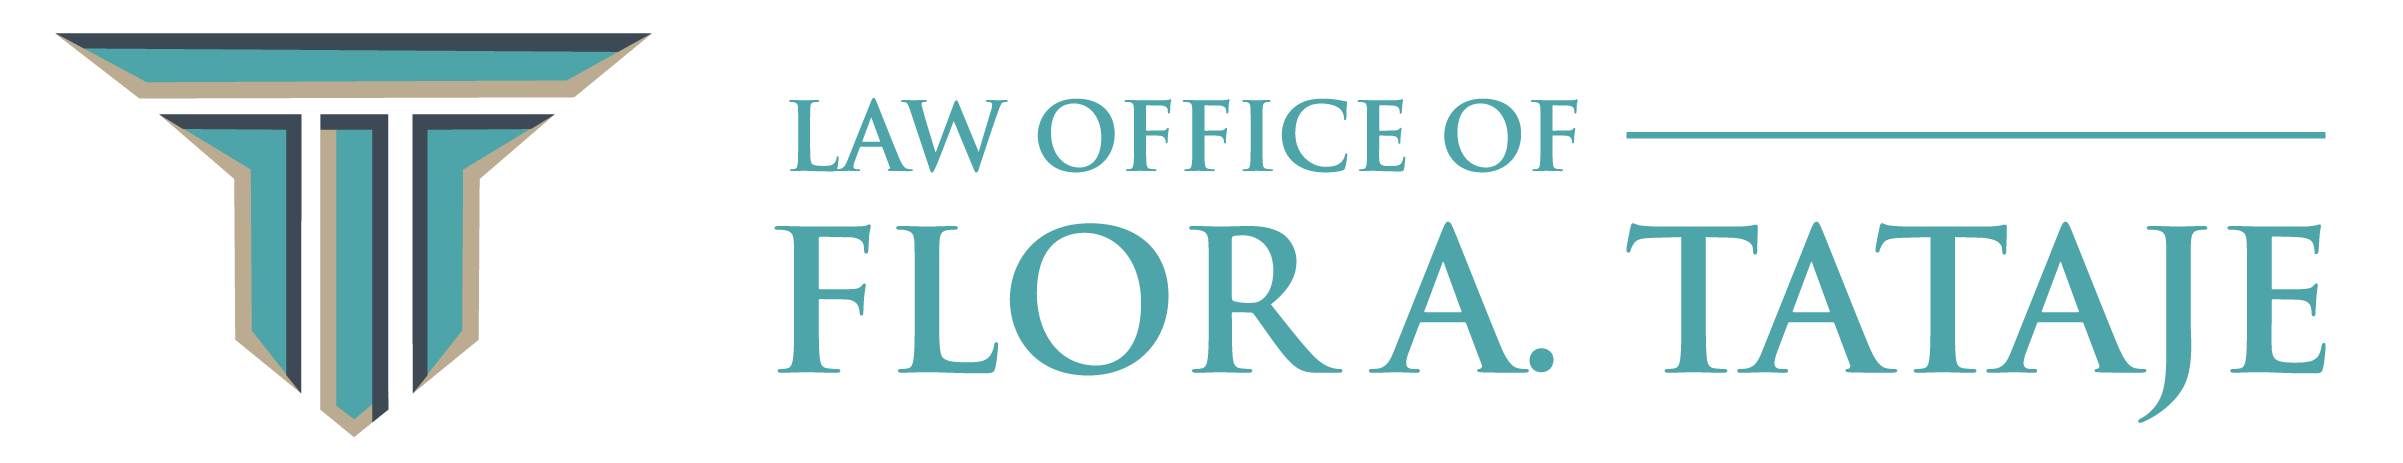 Law Office of Flor Tataje logo